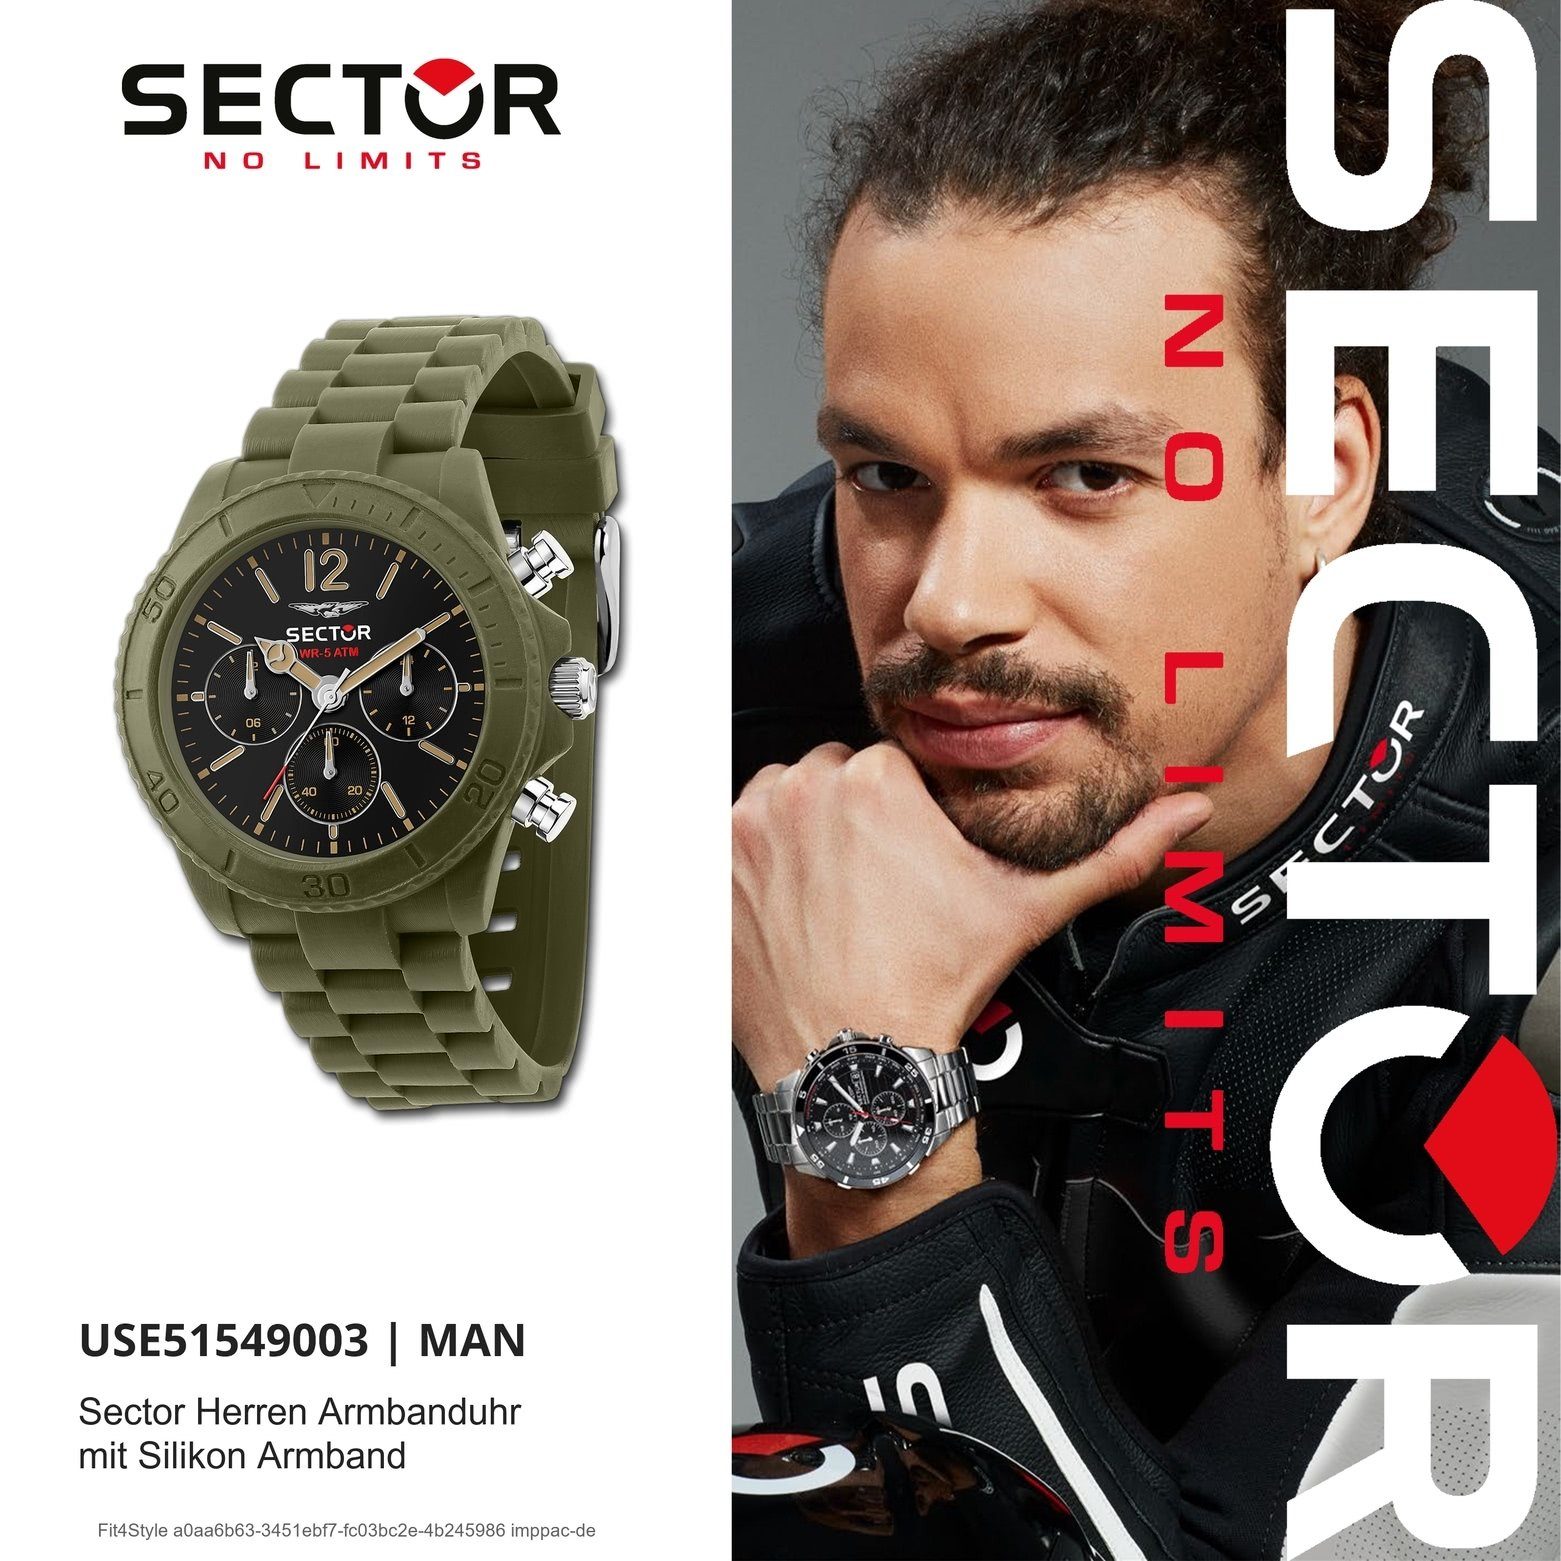 45mm), Fashion Sector Multifunktionsuhr (ca. Armbanduhr rund, Armbanduhr Herren Herren grün, Silikonarmband Multifunktion, Sector groß